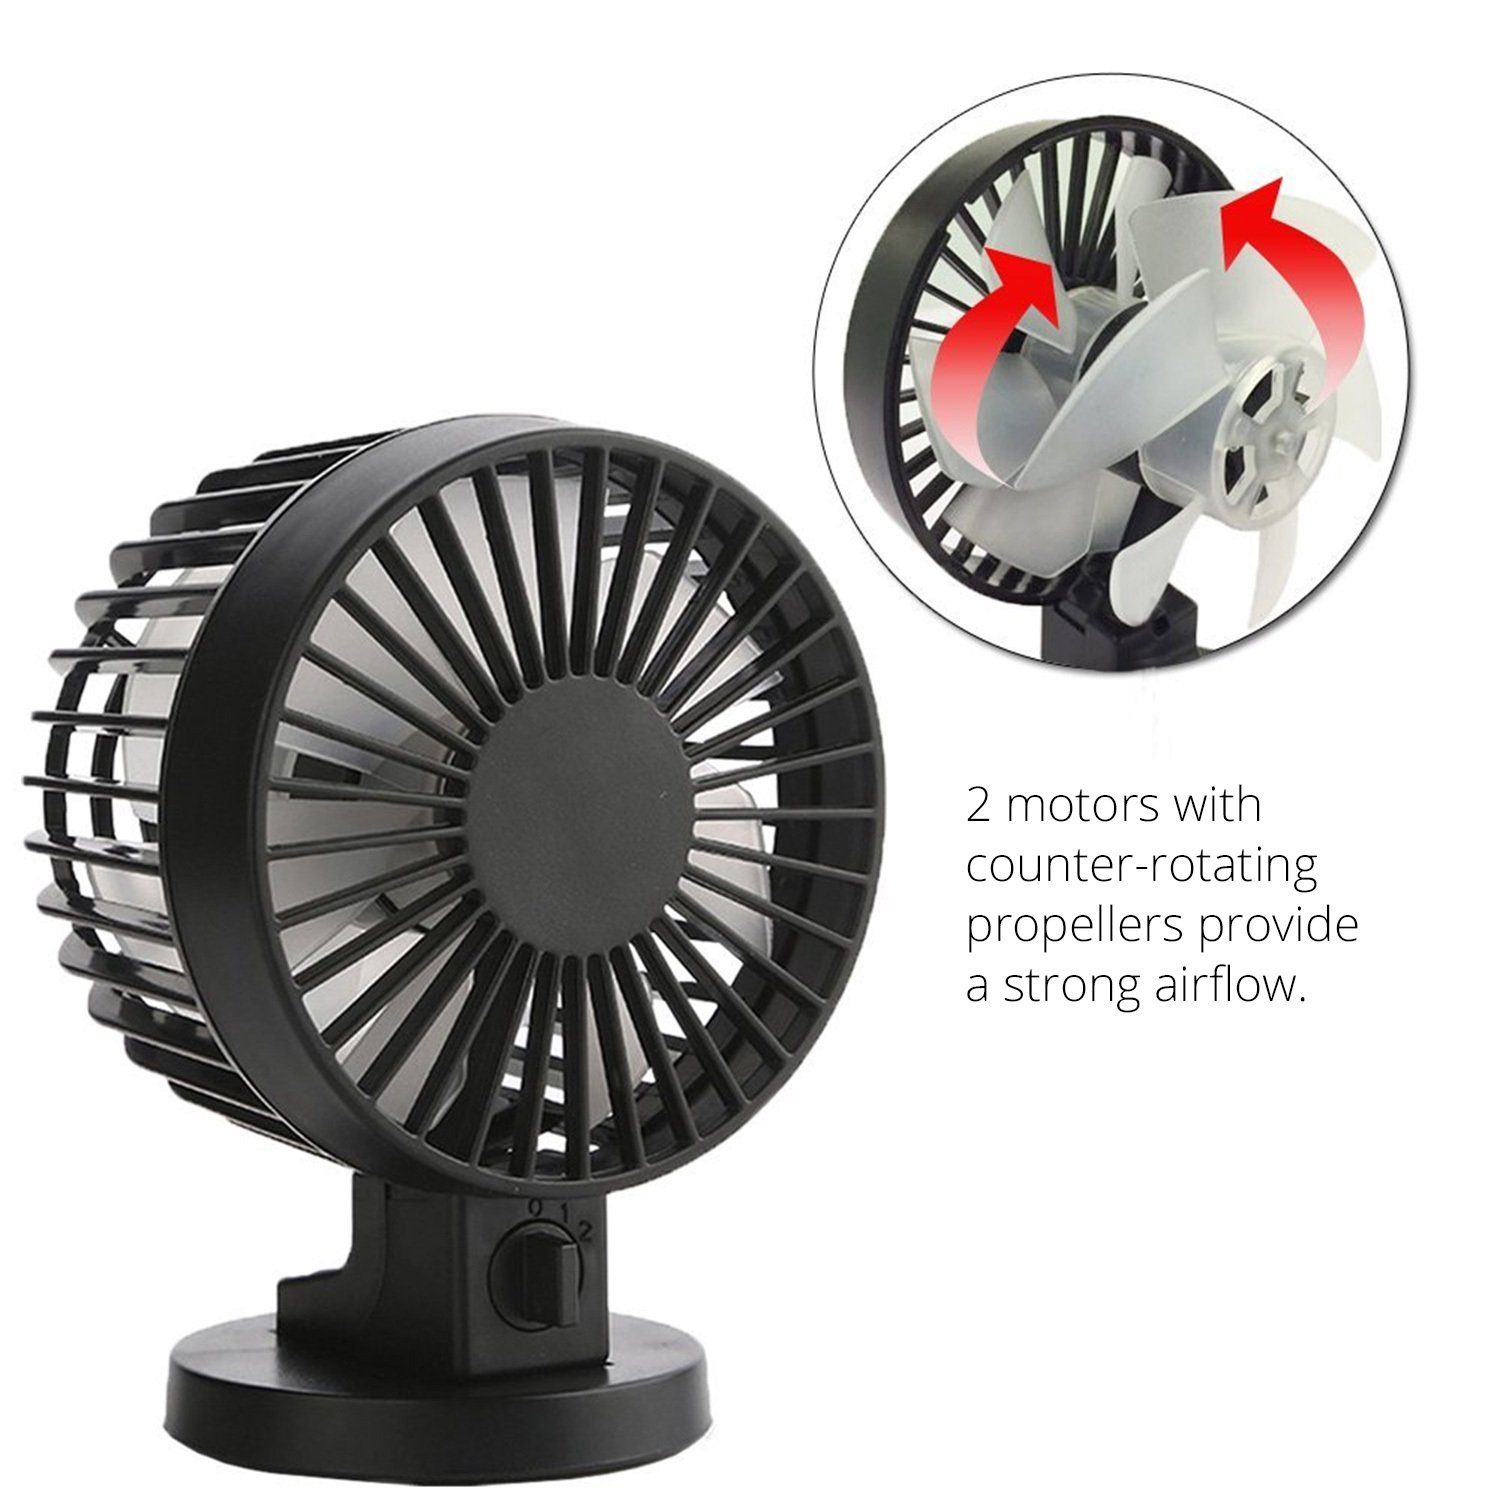 LA Ventilator, ZEPHYR VAGUE USB-Ventilator mini usb, ventilator Mini ABS-Kunststoff aus hochwertigem gefertigt schwarz Tragbarer